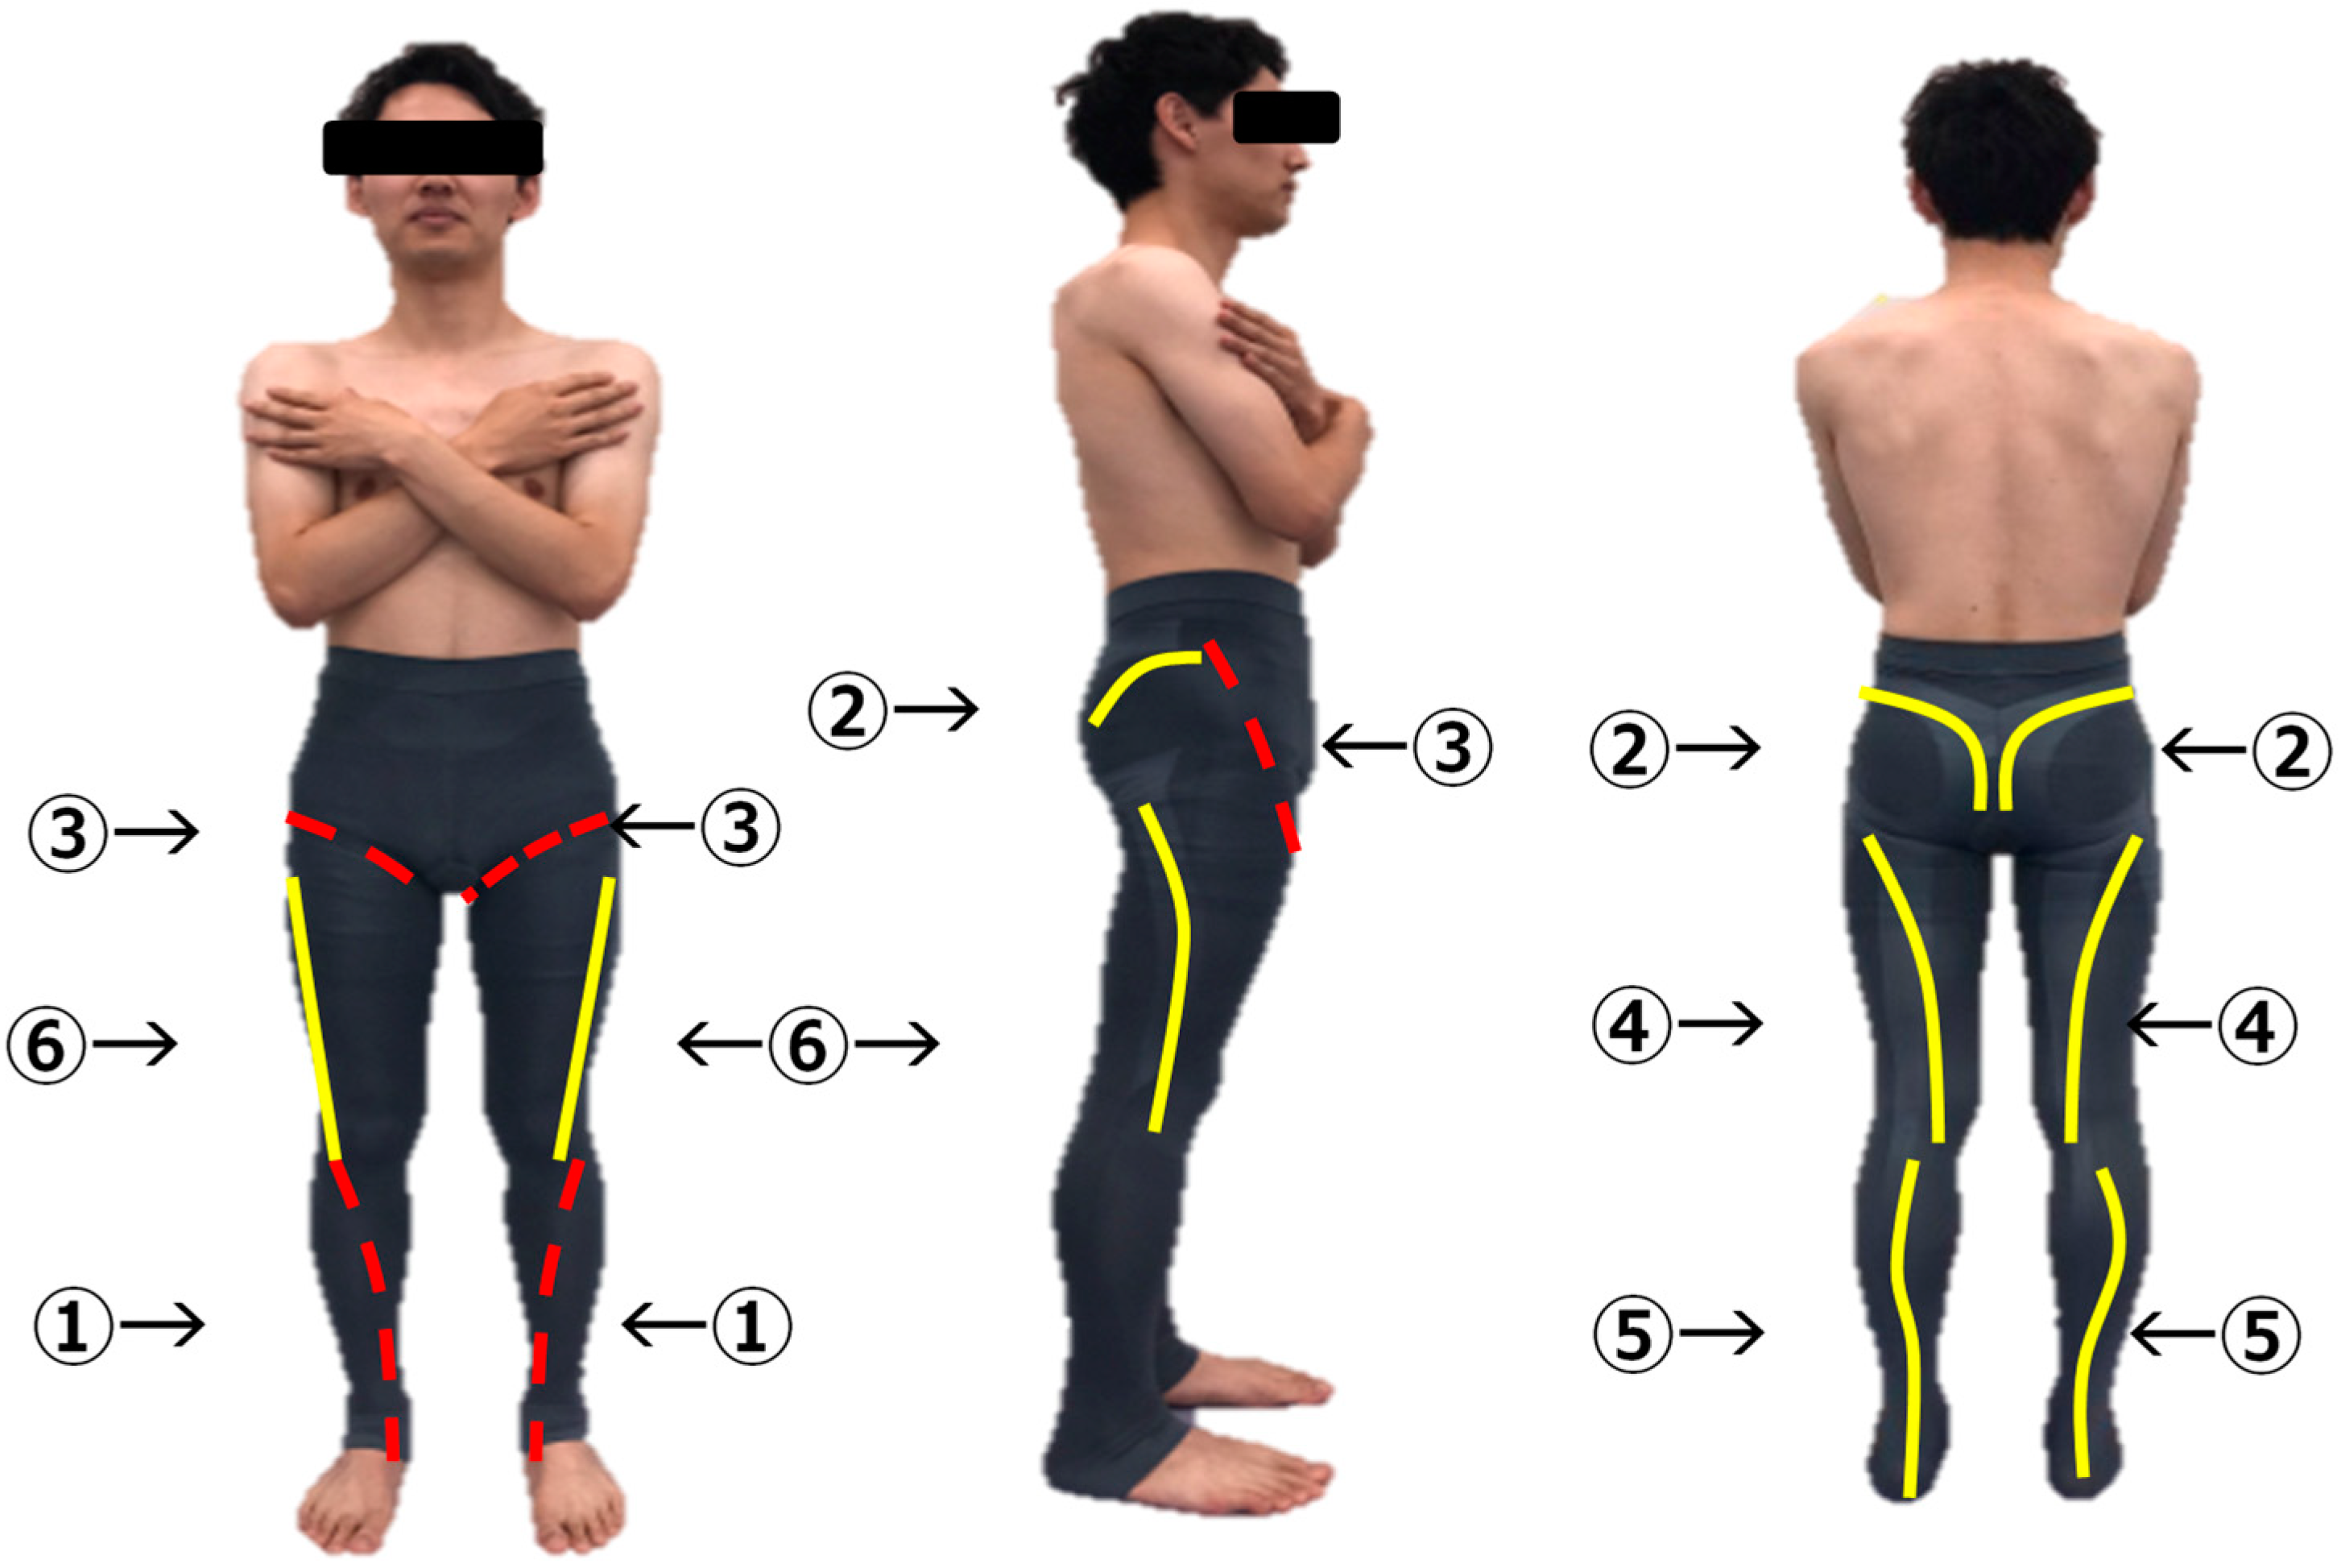 T-25 thigh compression garment to enhances dynamic knee control